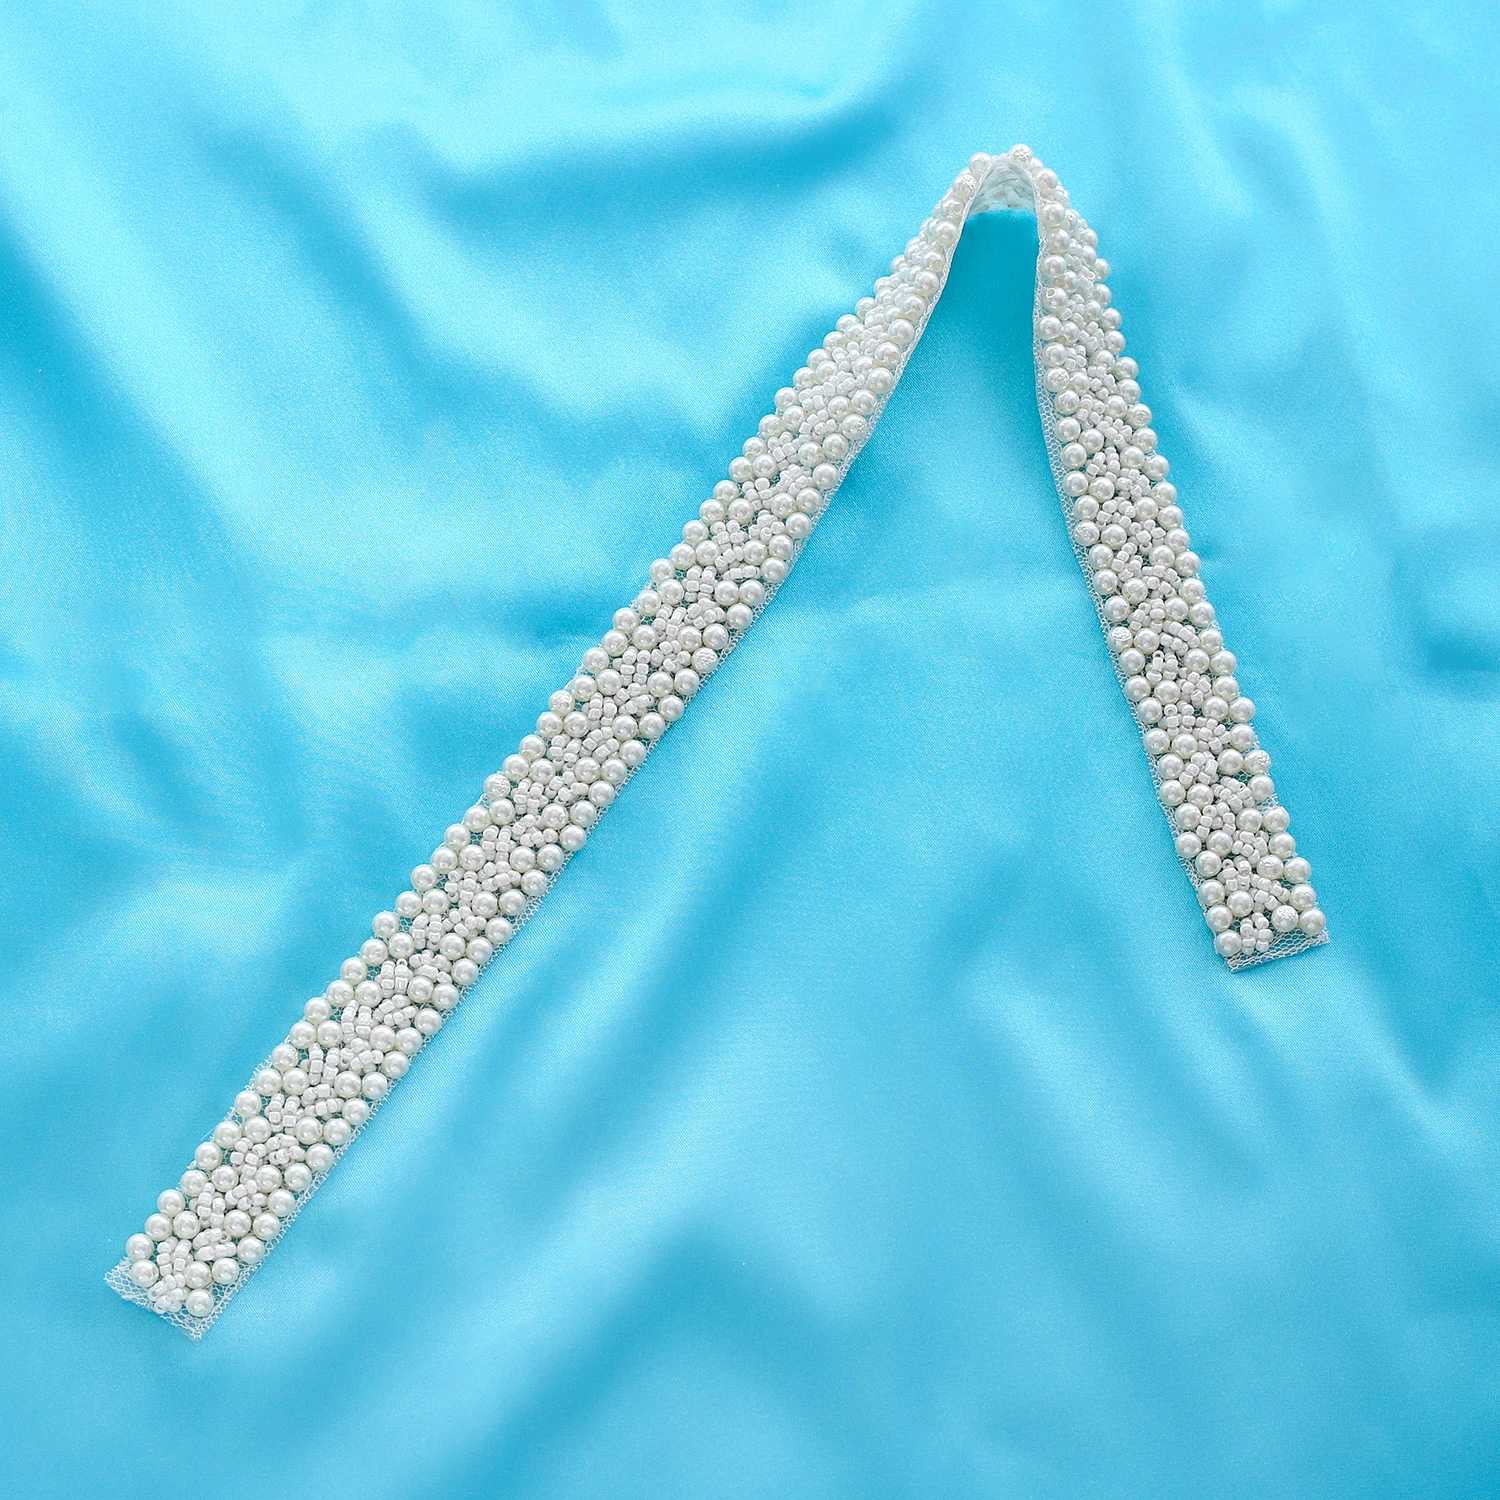 SESTHFAR Pearls Wedding Belts handmade Bridal Belts Fashionable Pearl Beaded Bridal Sashes Wedding Accessories images - 6